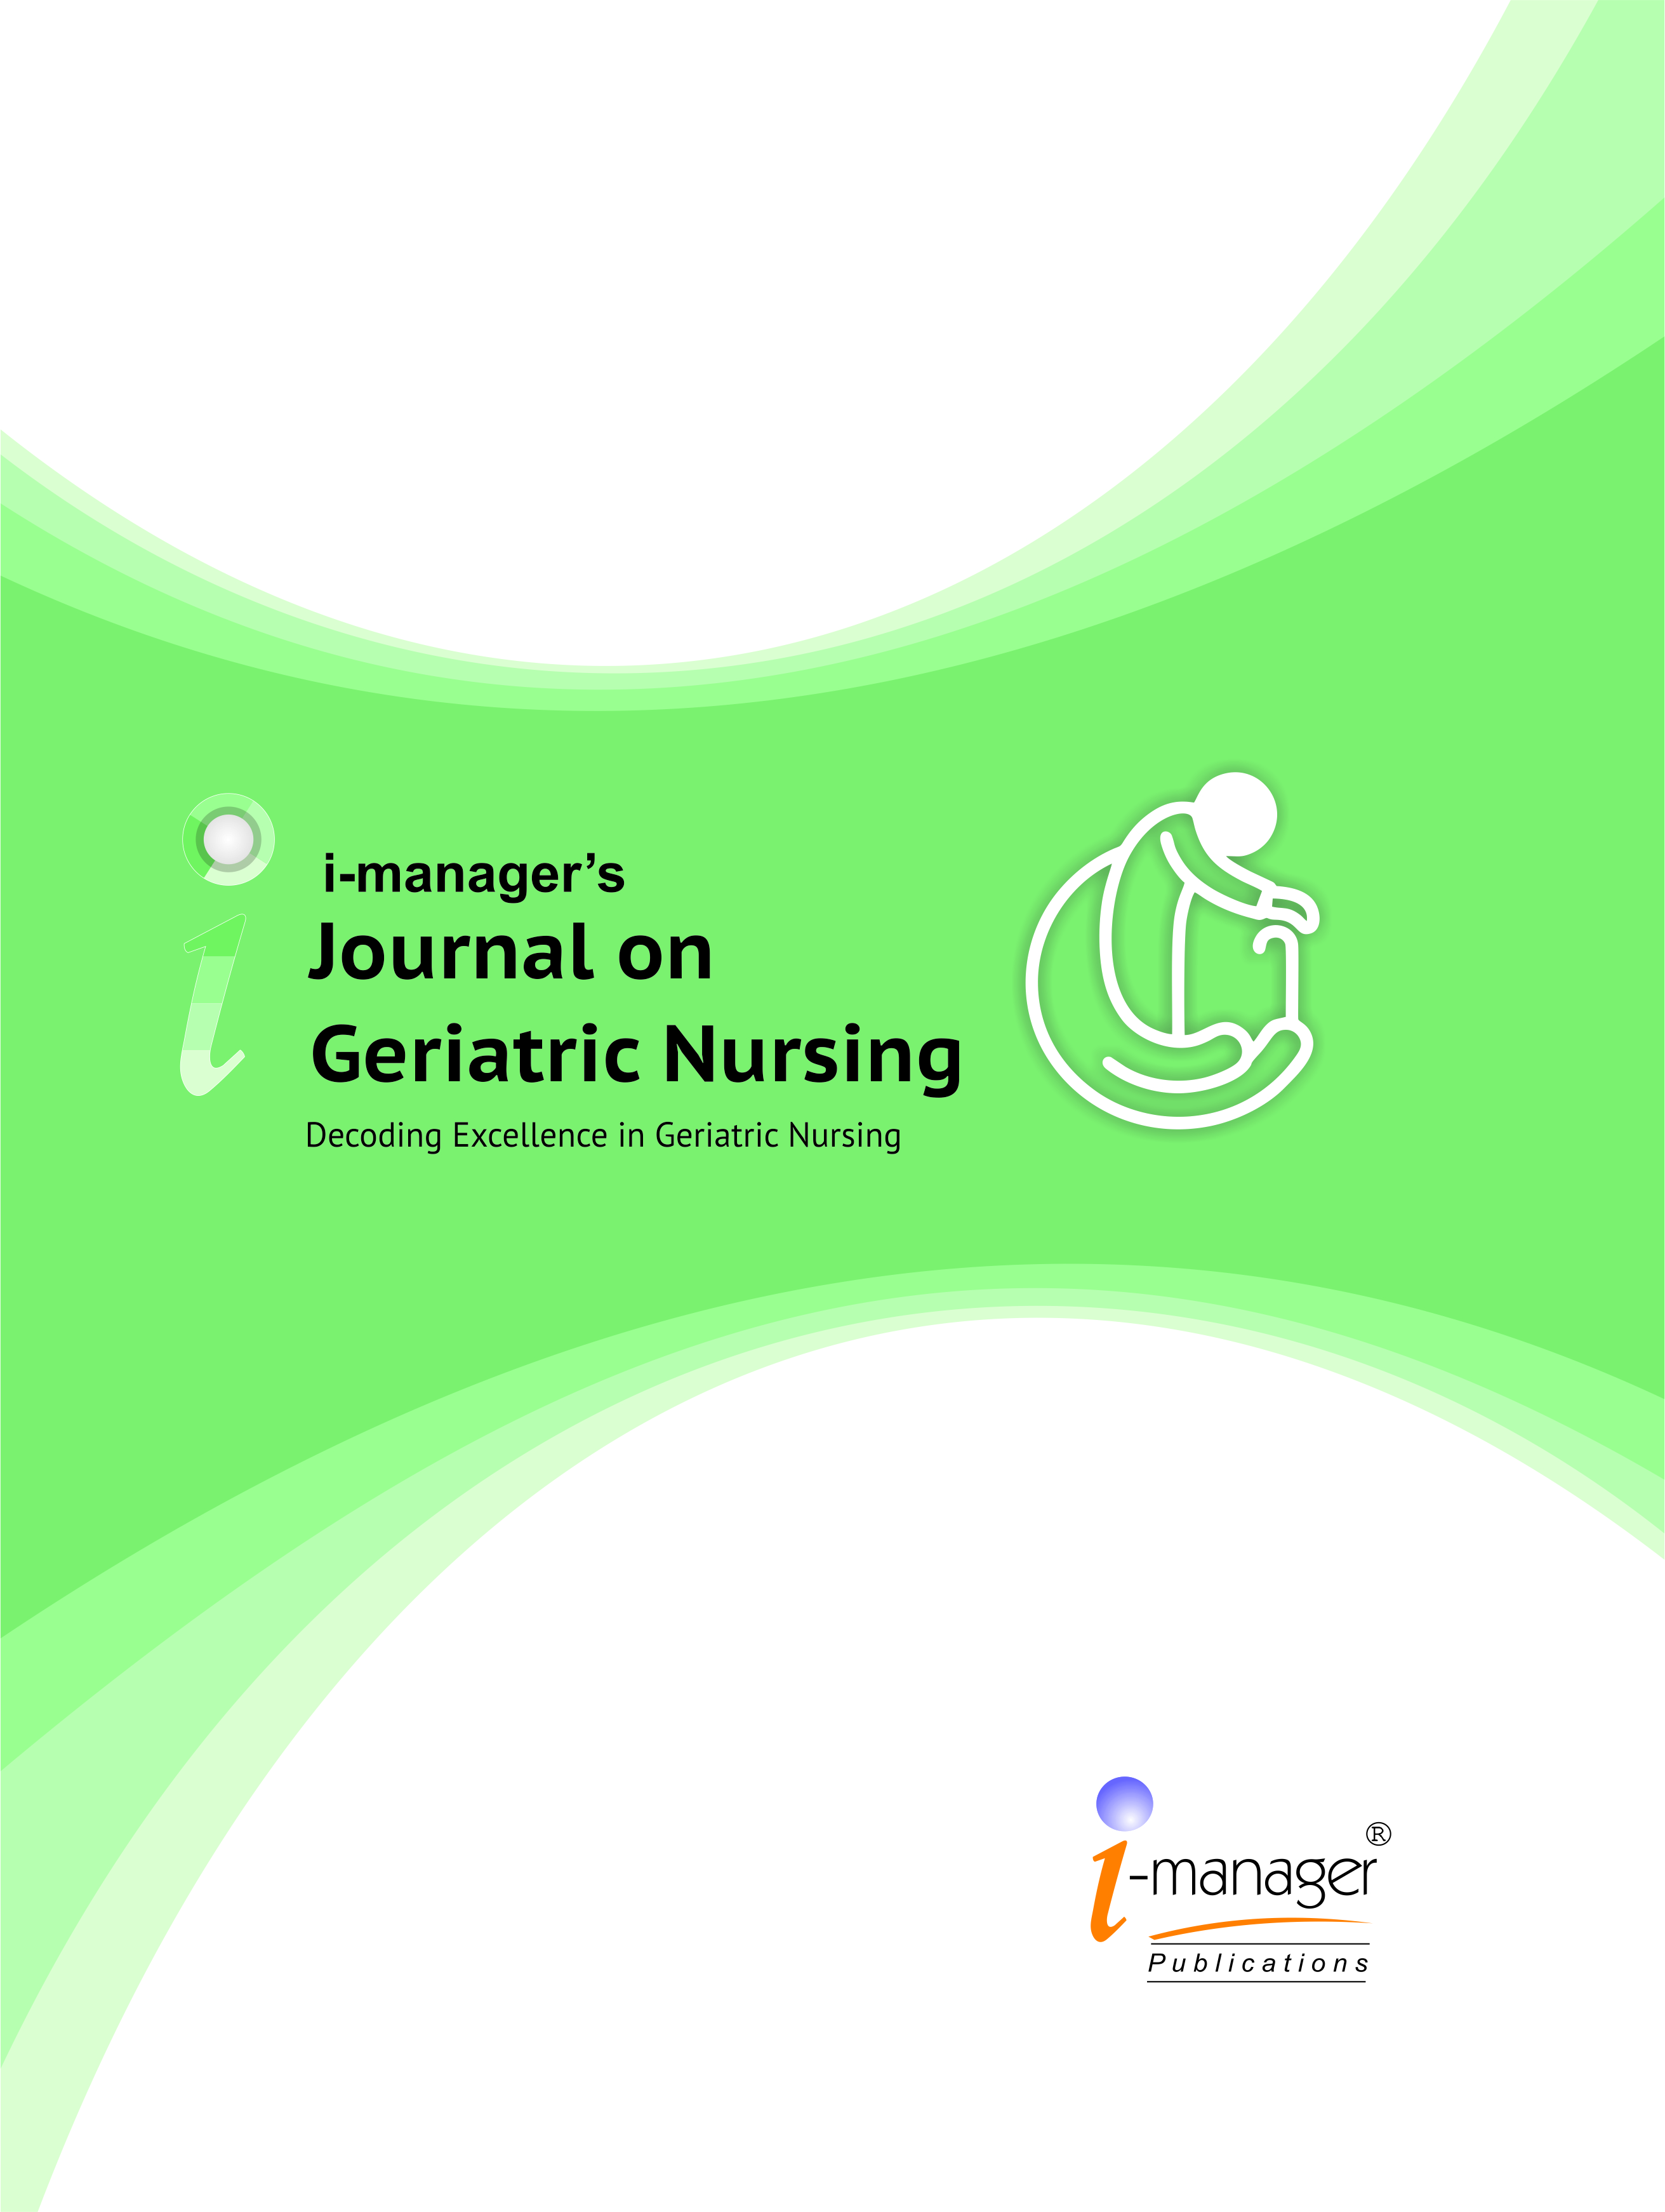 Journal on Genetic Nursing